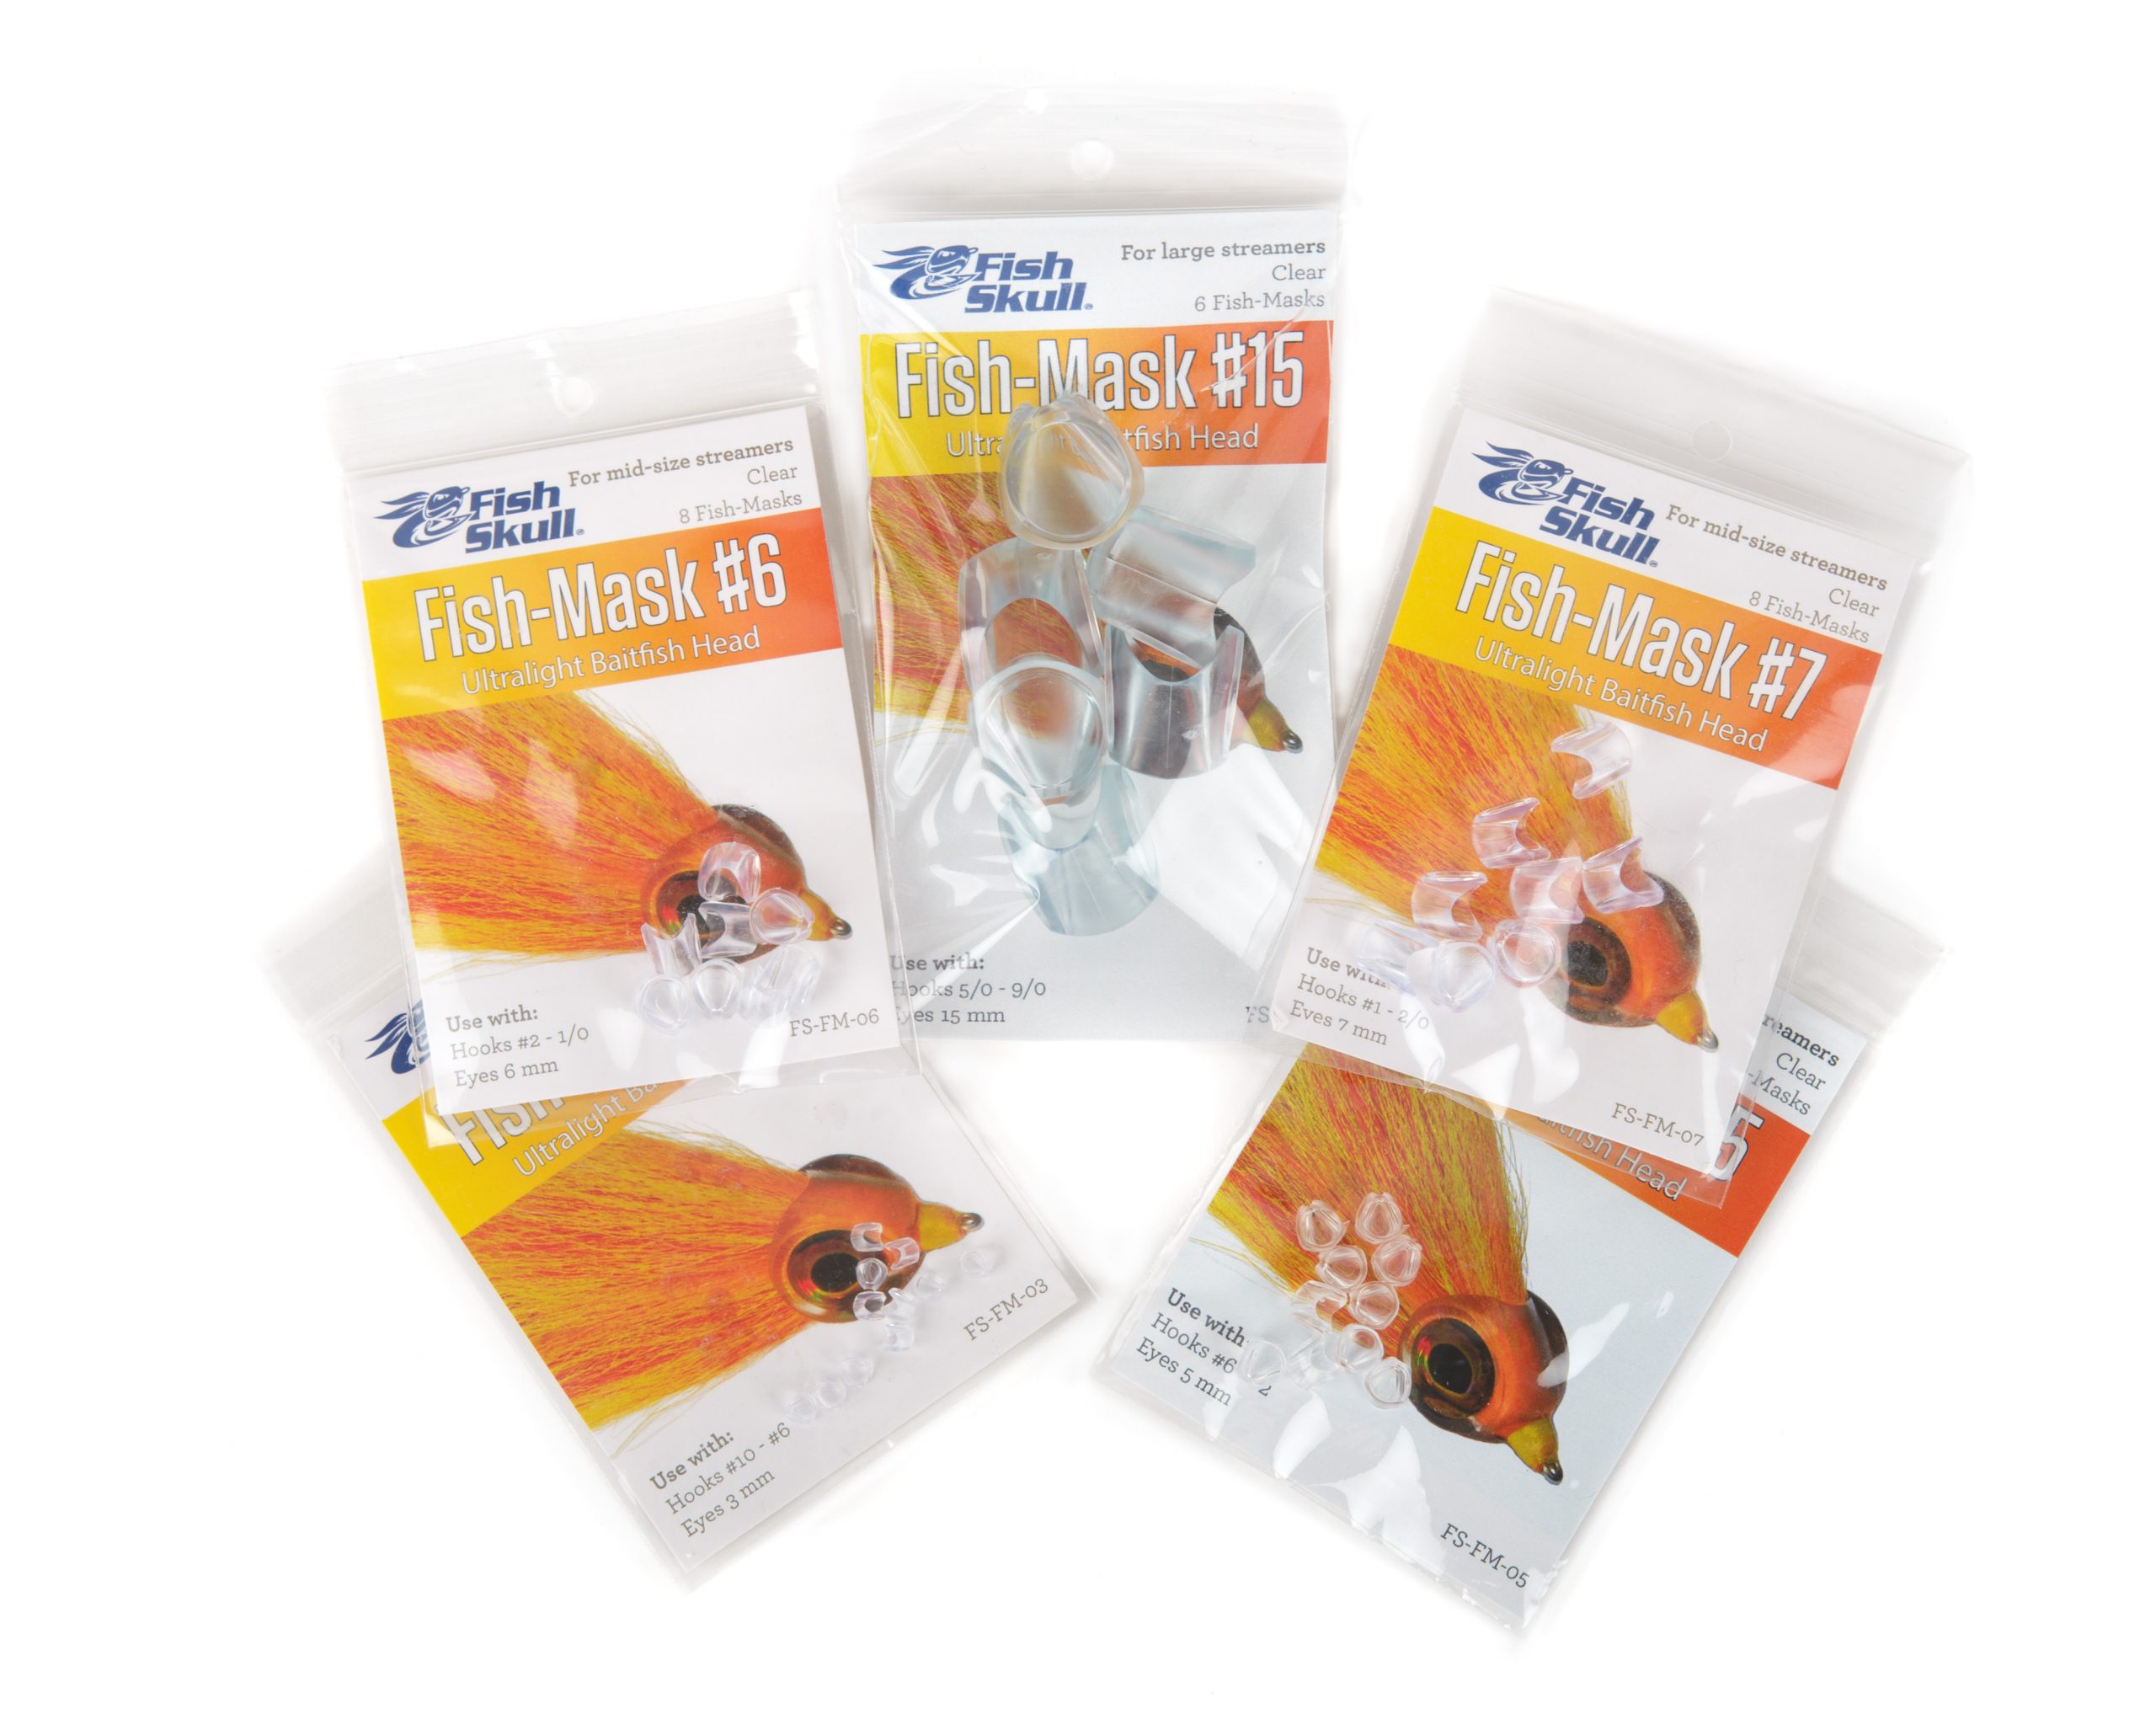 FS FM fish mask 2